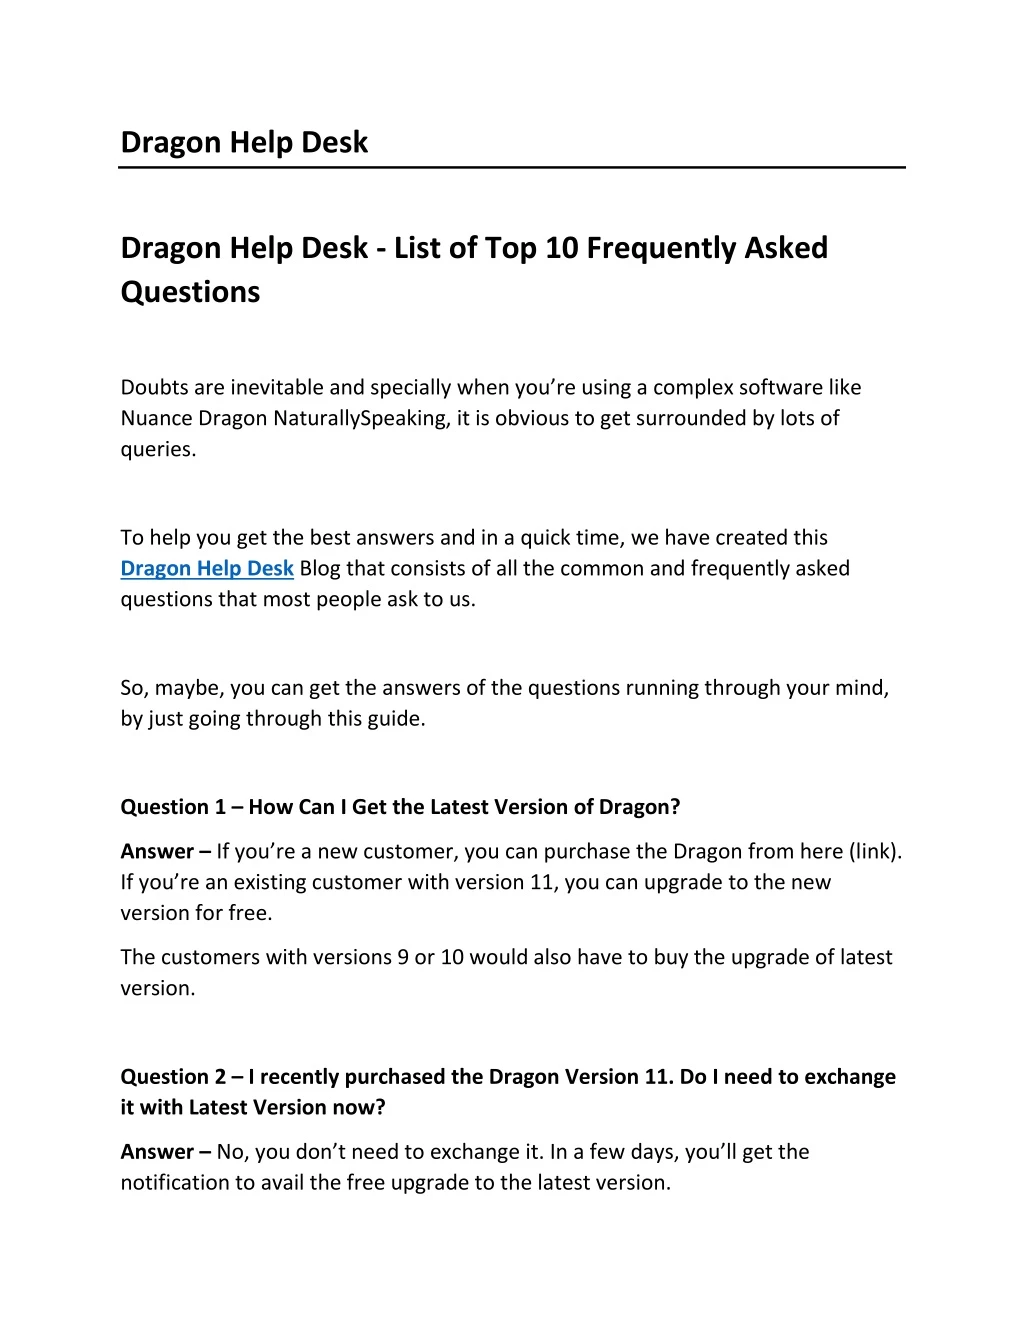 dragon help desk